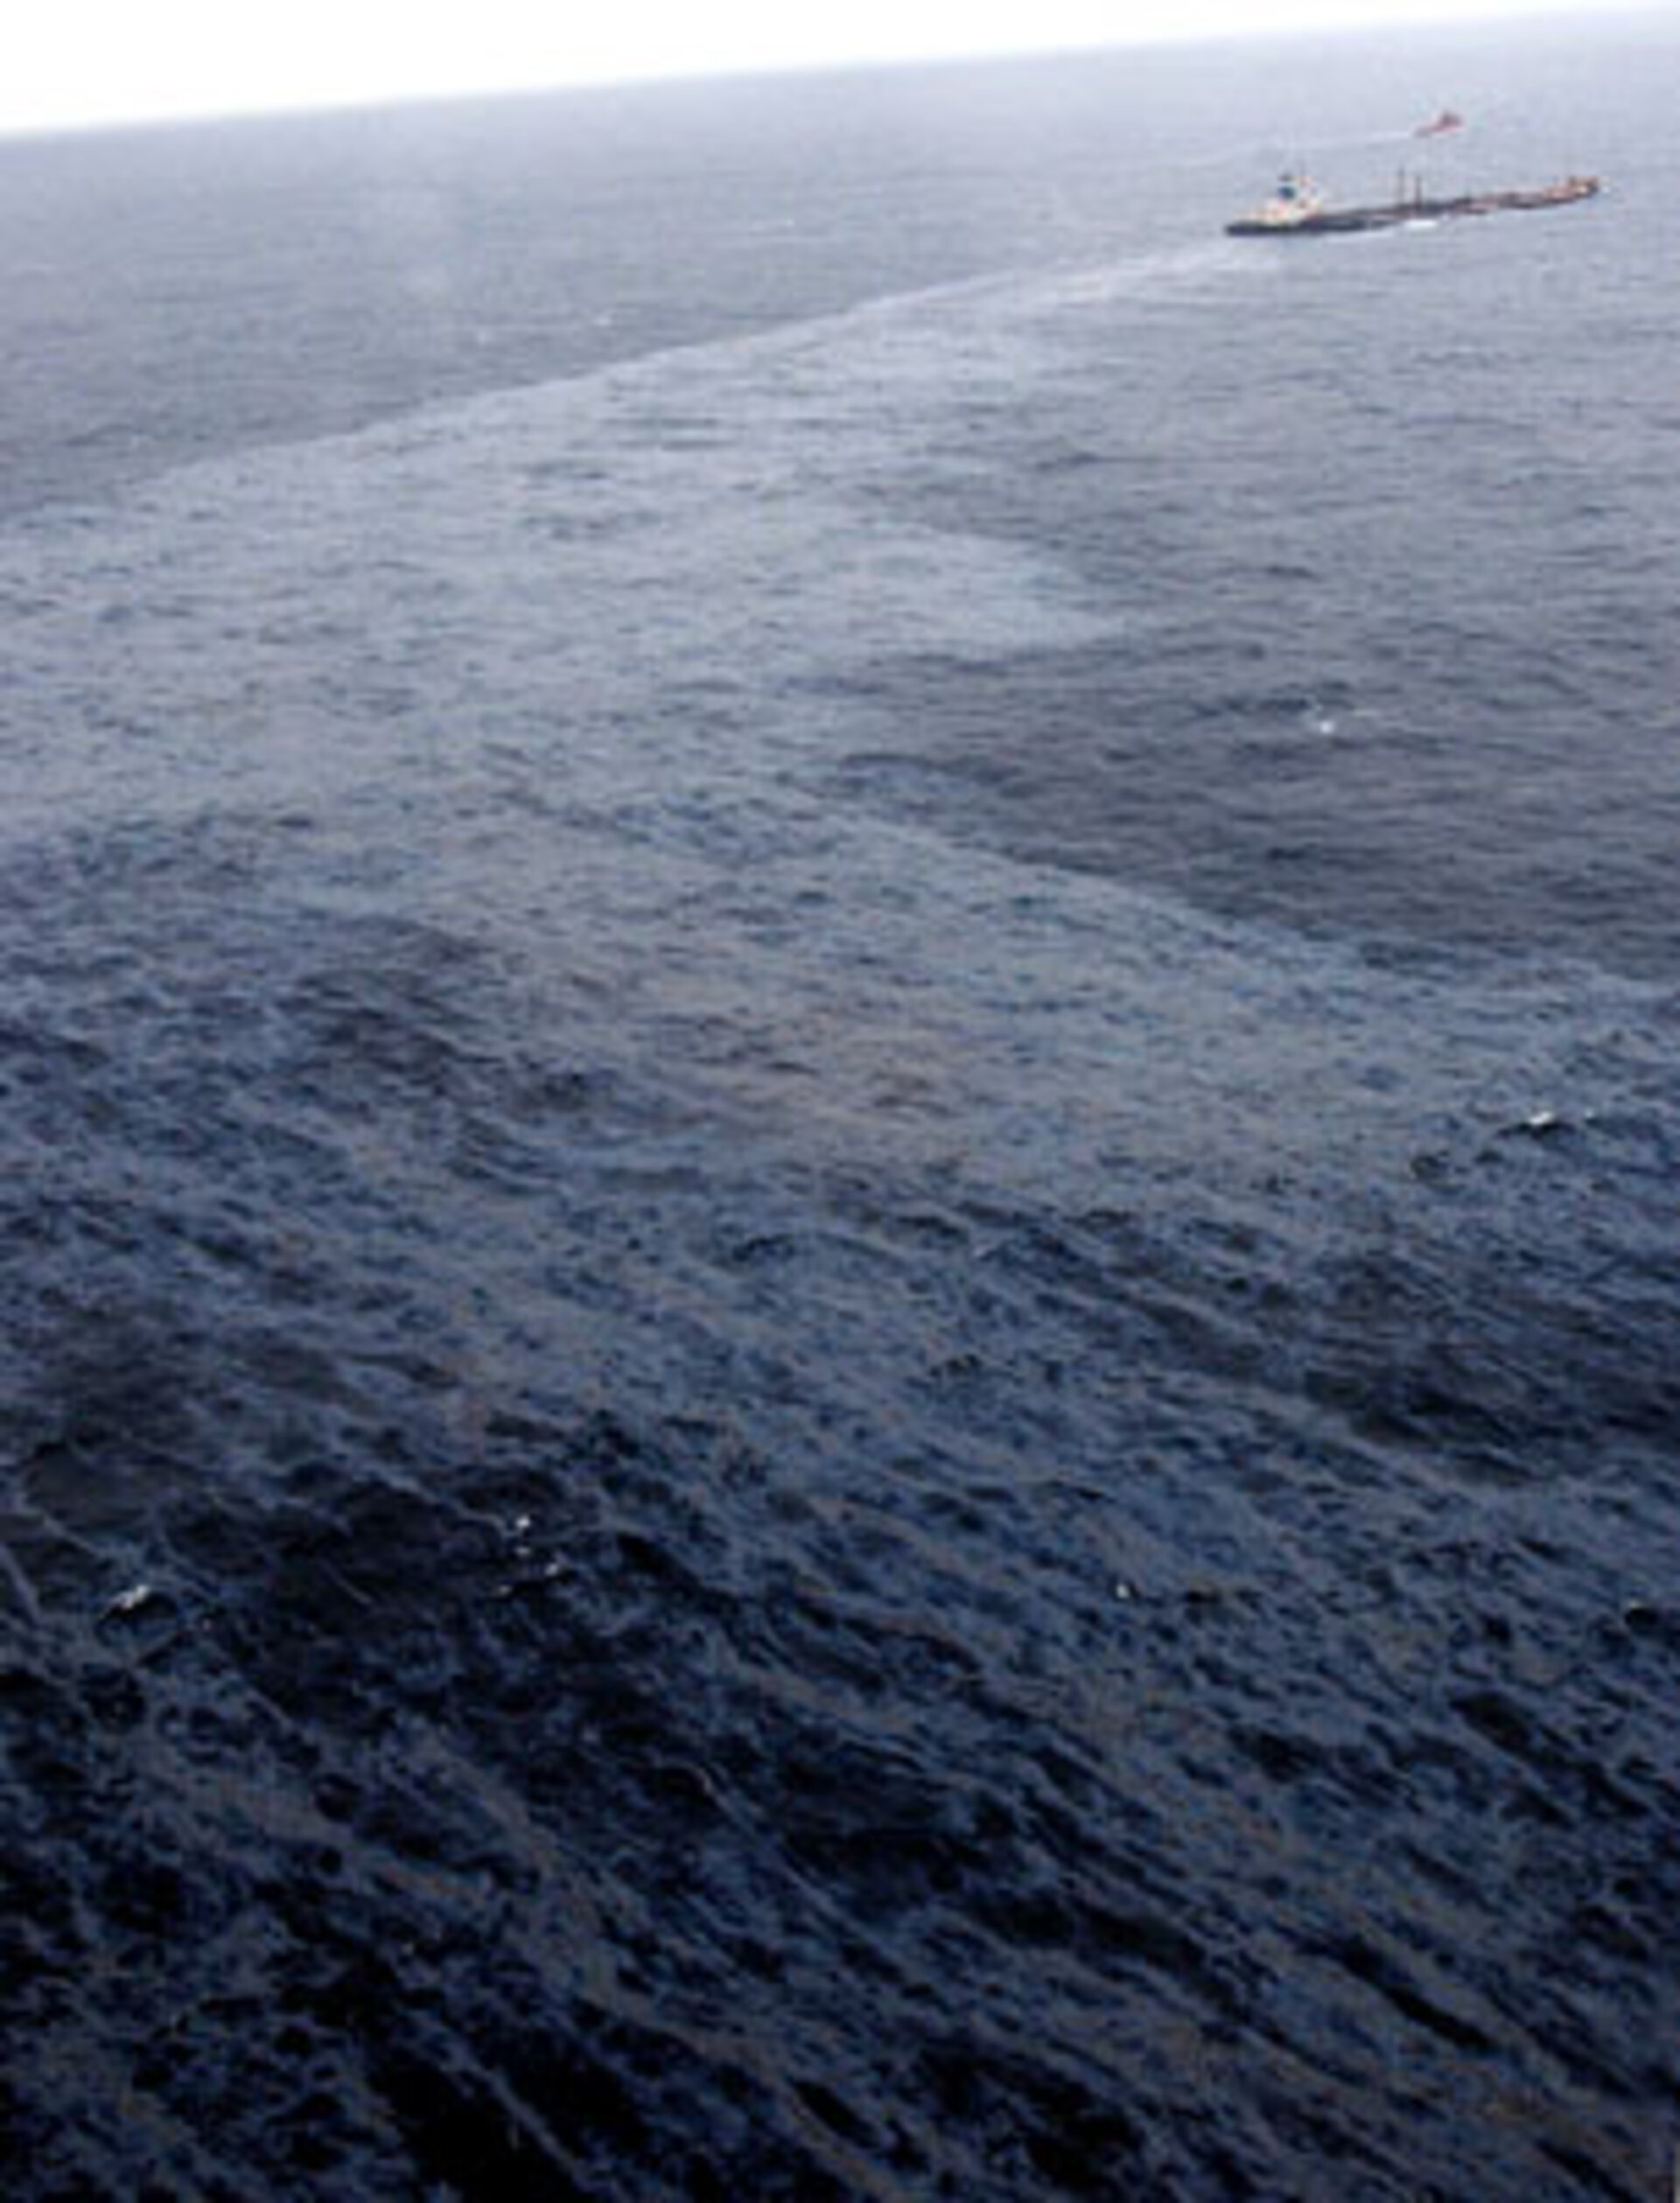 Part of an oil slick of several kilometers follows the stricken Bahamas-flagged Prestige oil tanker